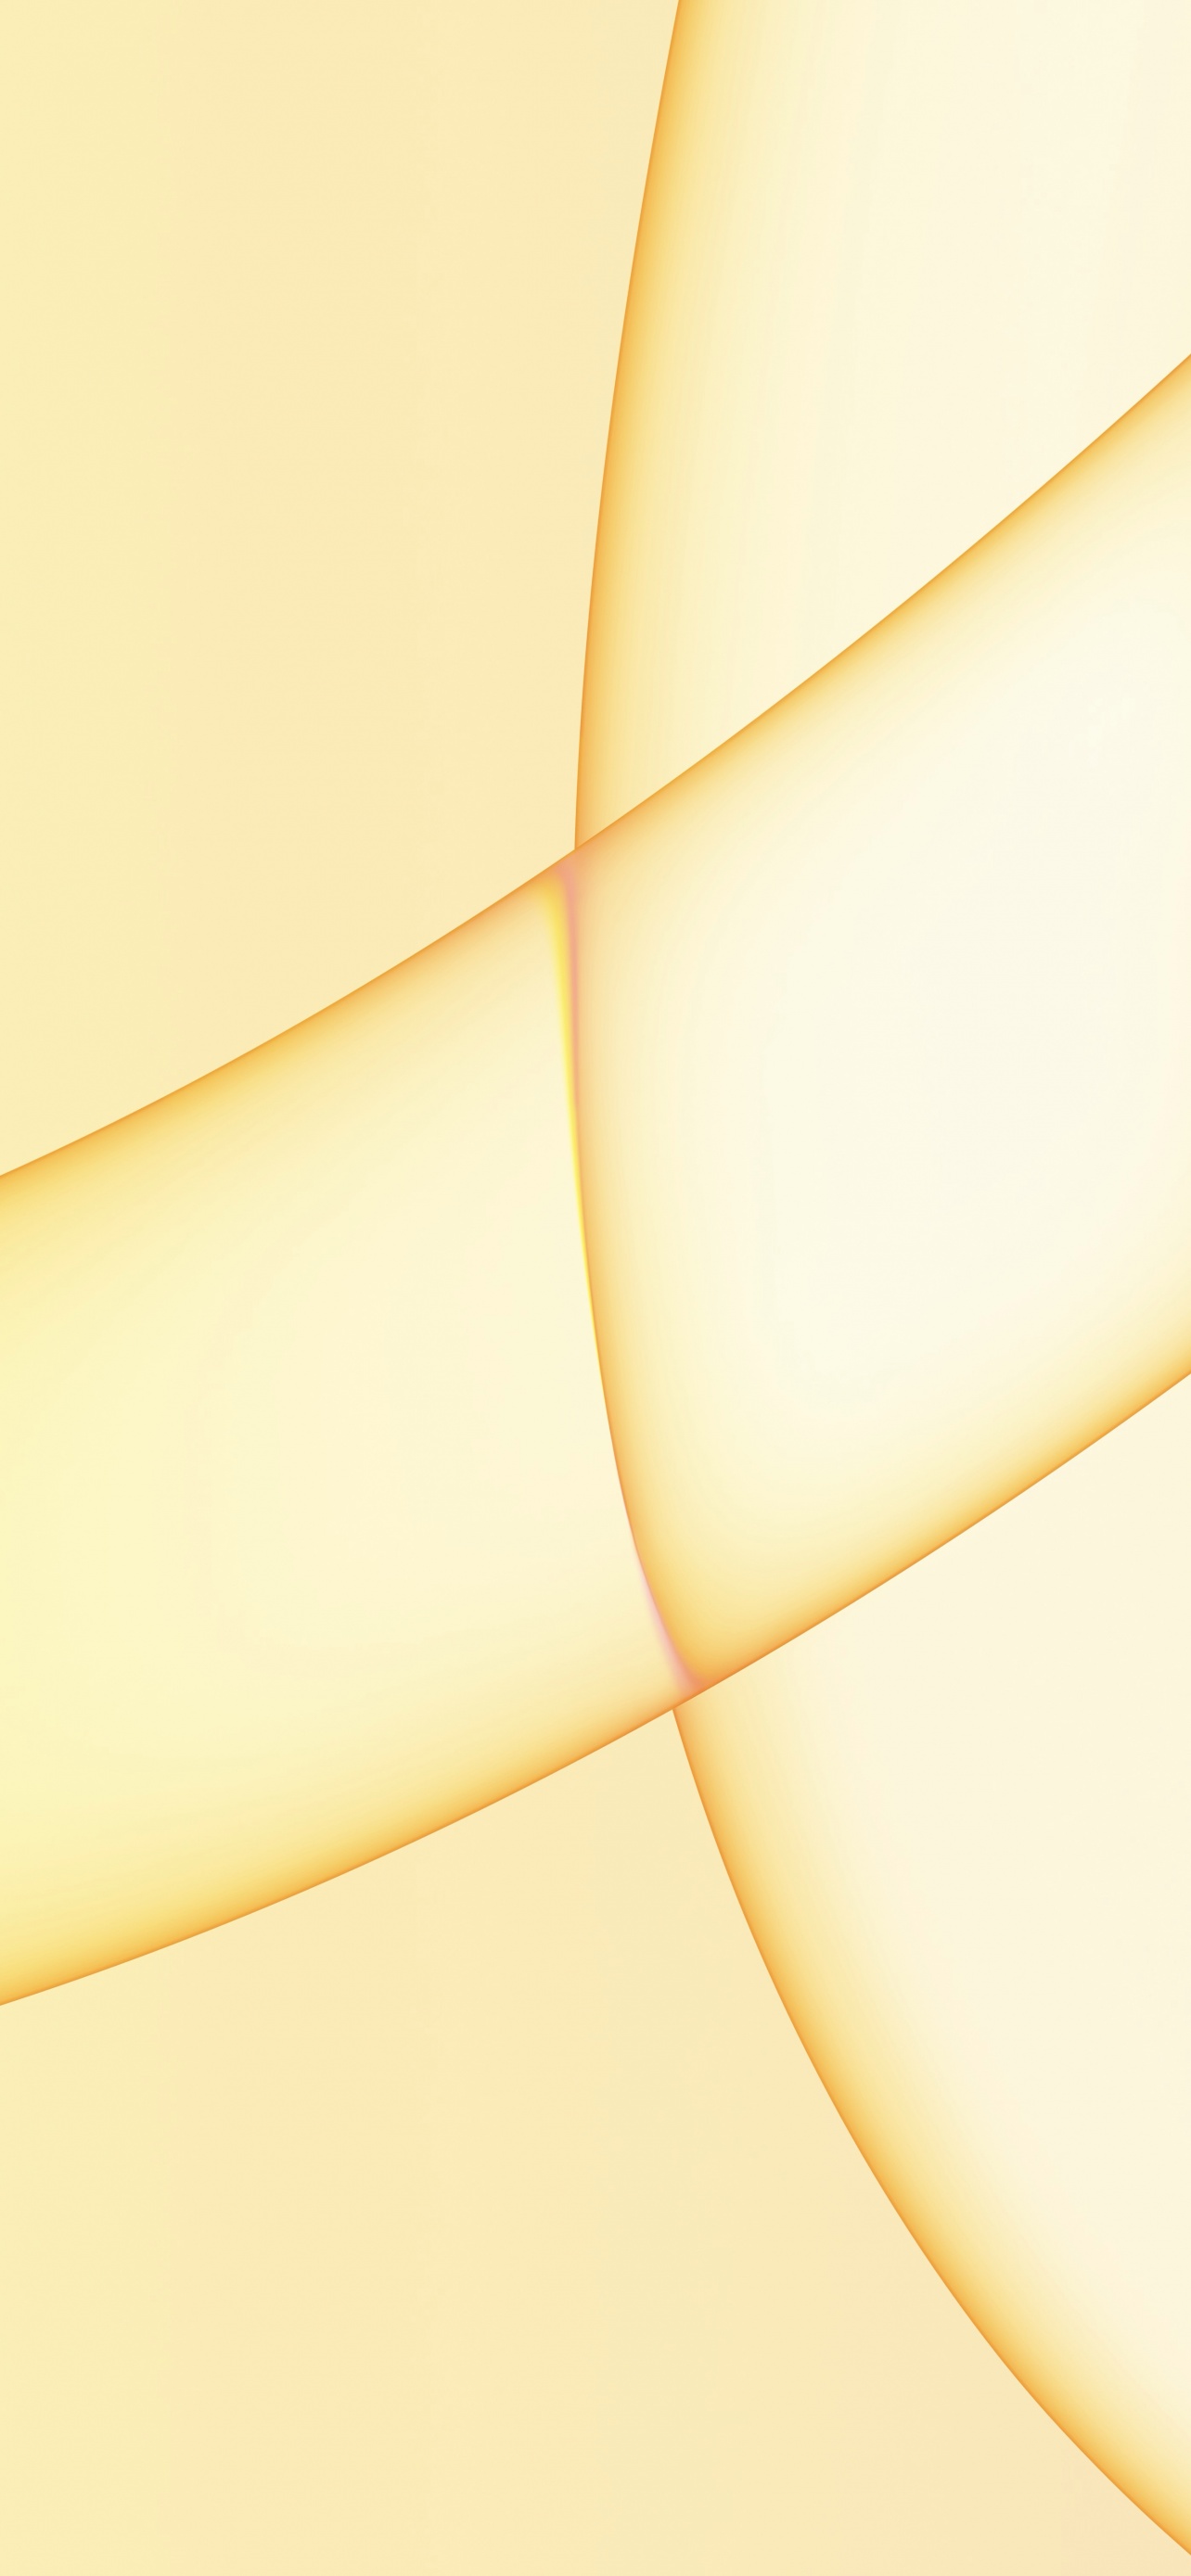 iMac 2021 Wallpaper 4K, Yellow background